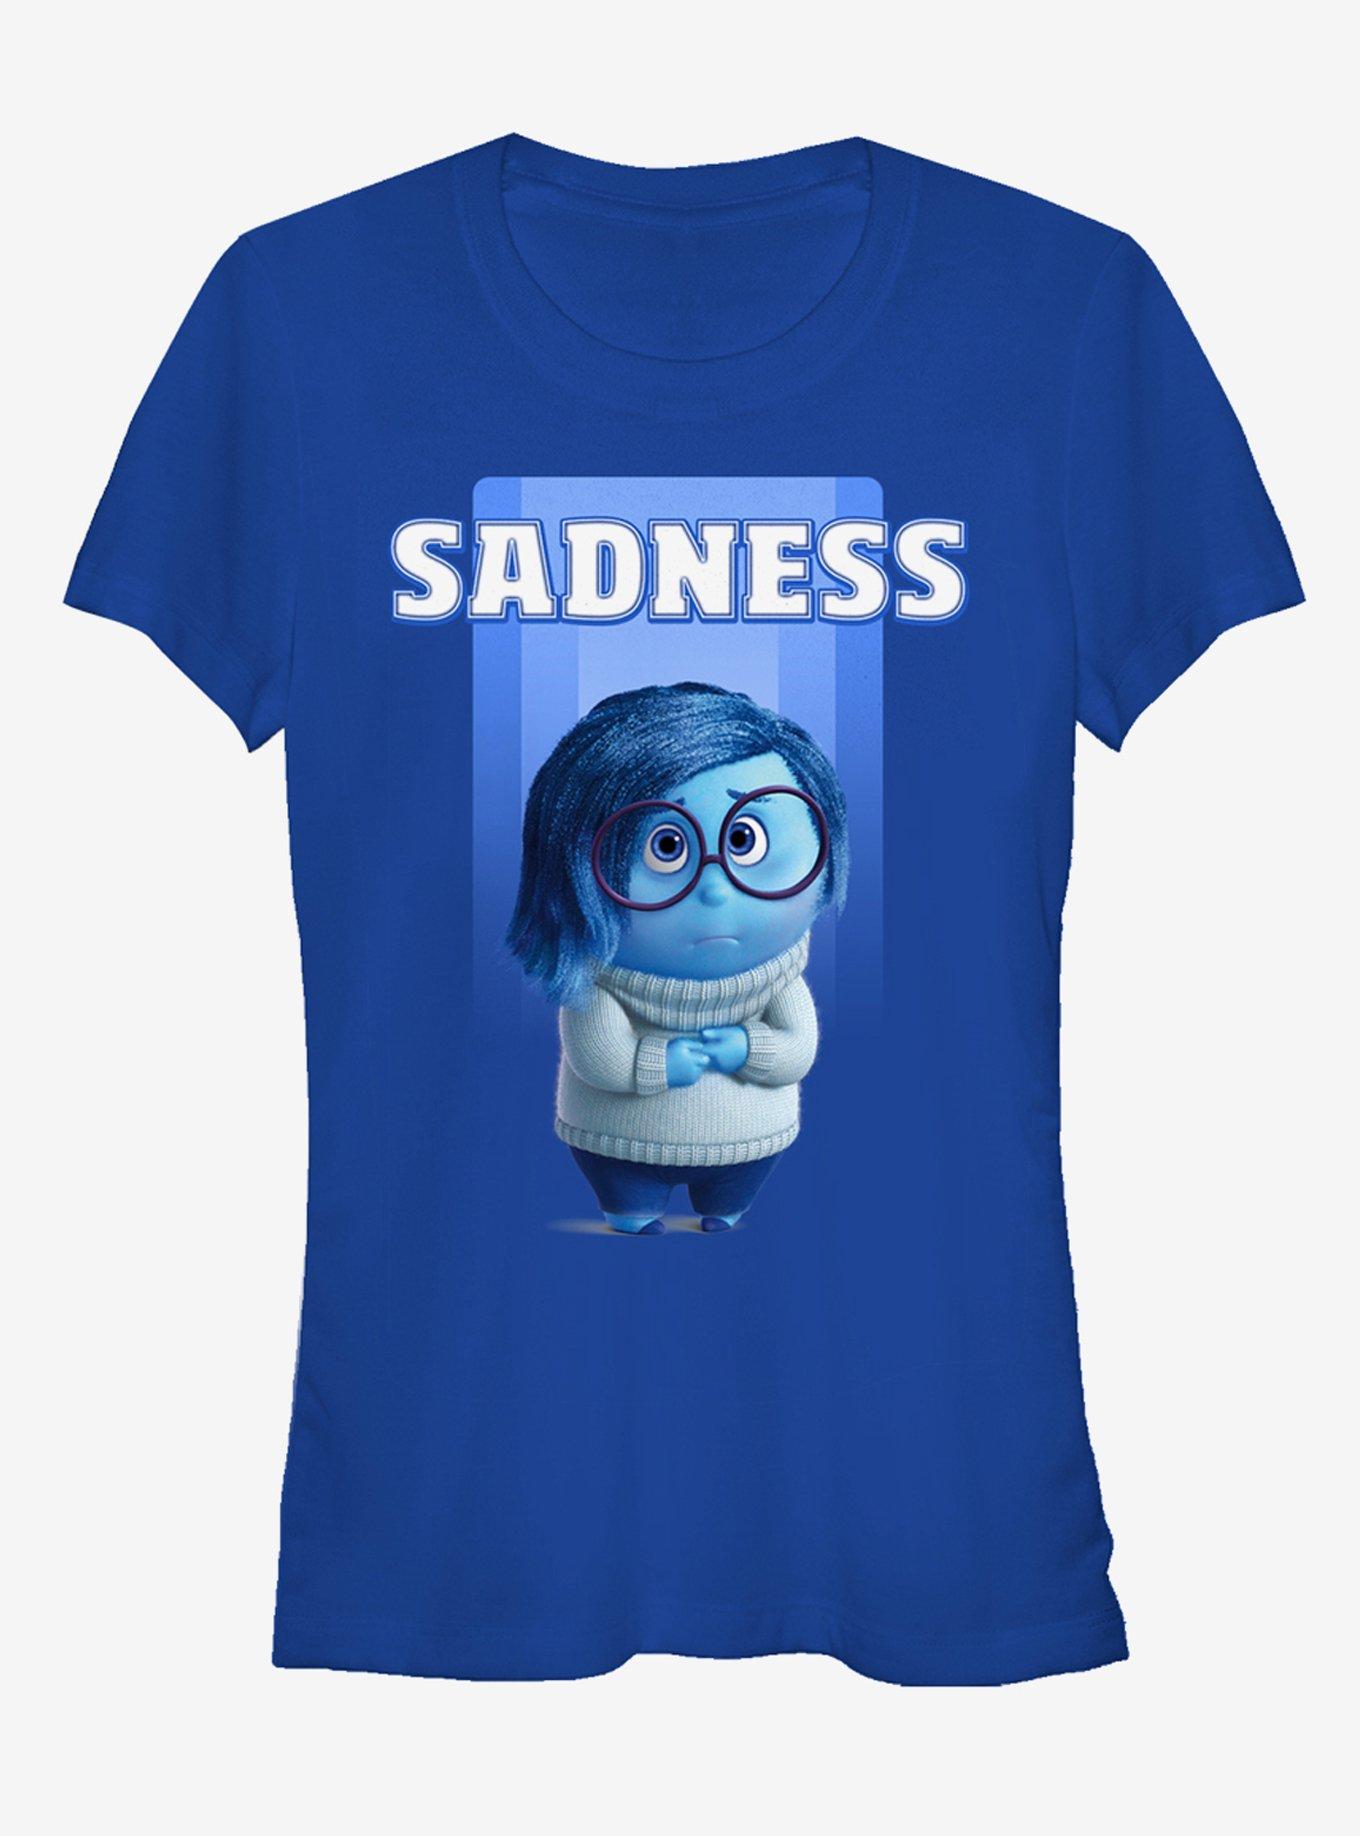 Disney Pixar Inside Out Sadness Portrait Girls T-Shirt, ROYAL, hi-res